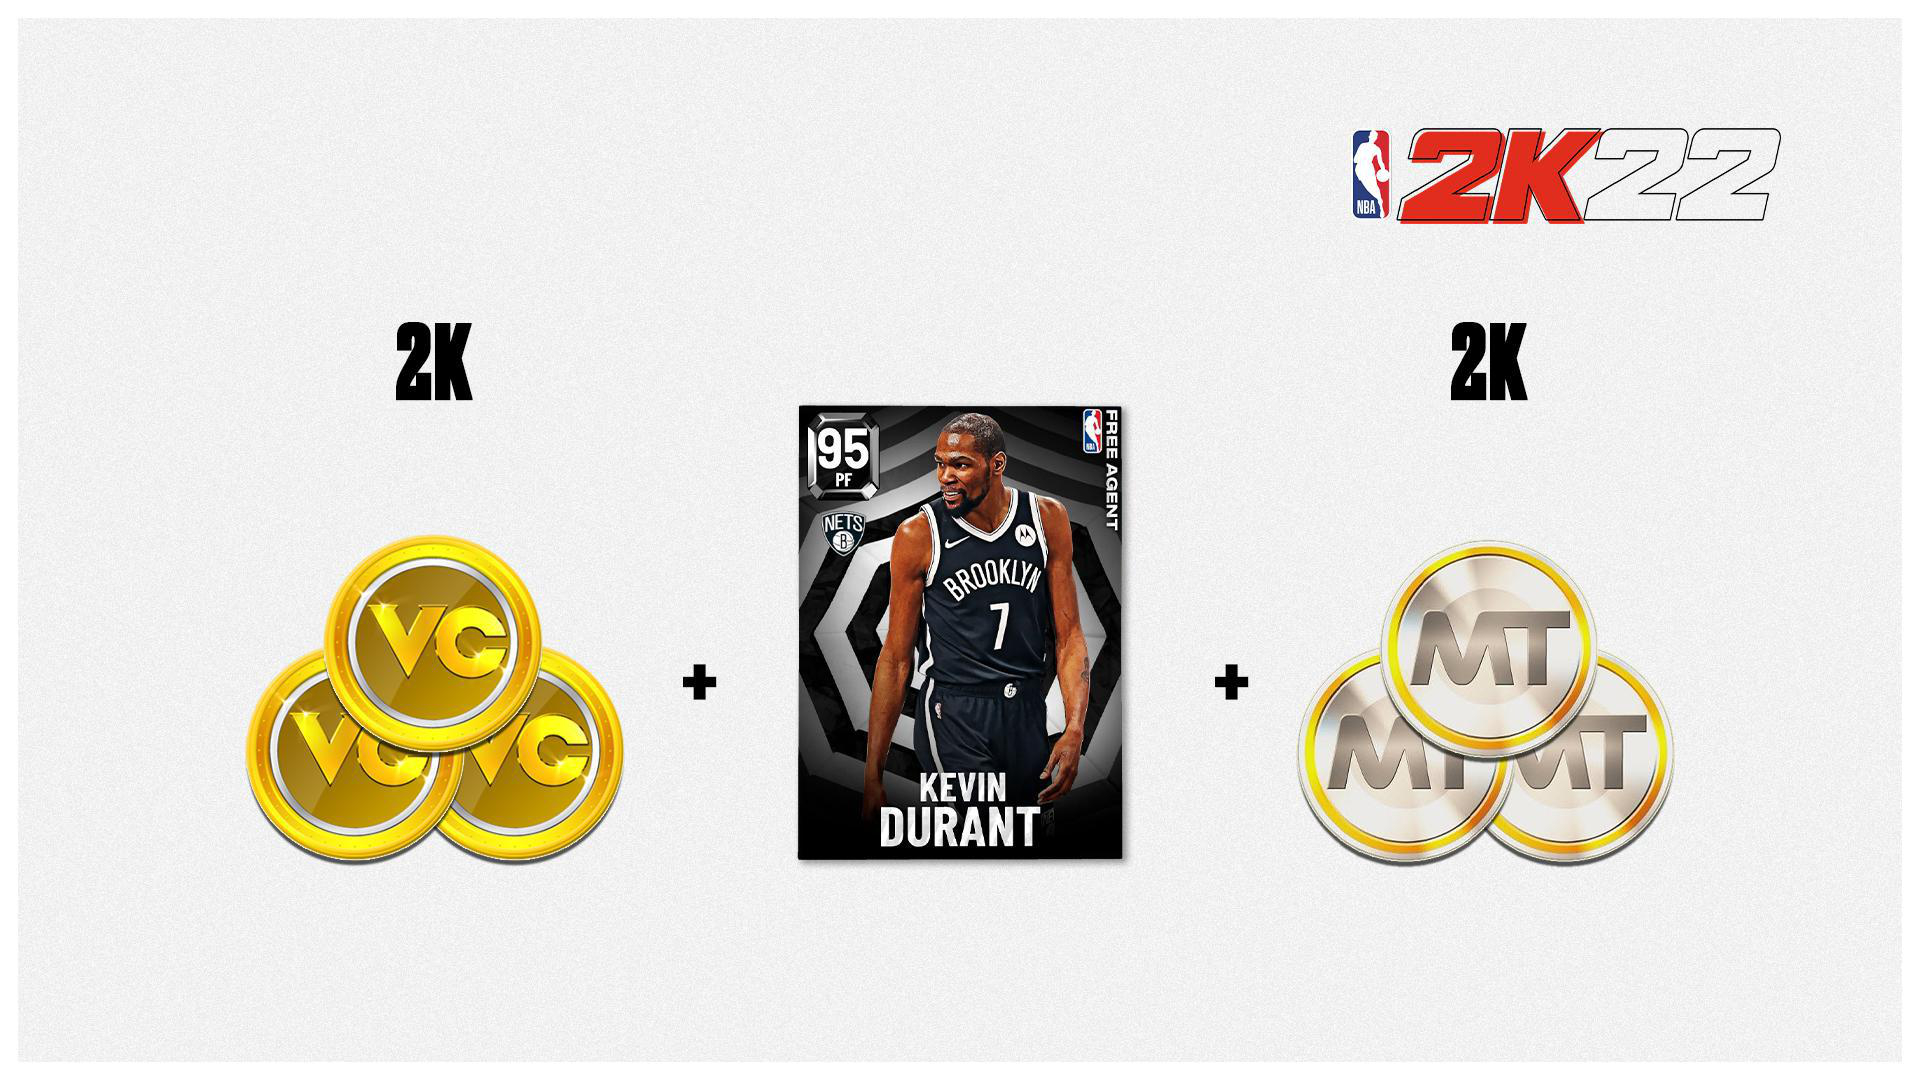 2K22 [Xbox One] - NBA